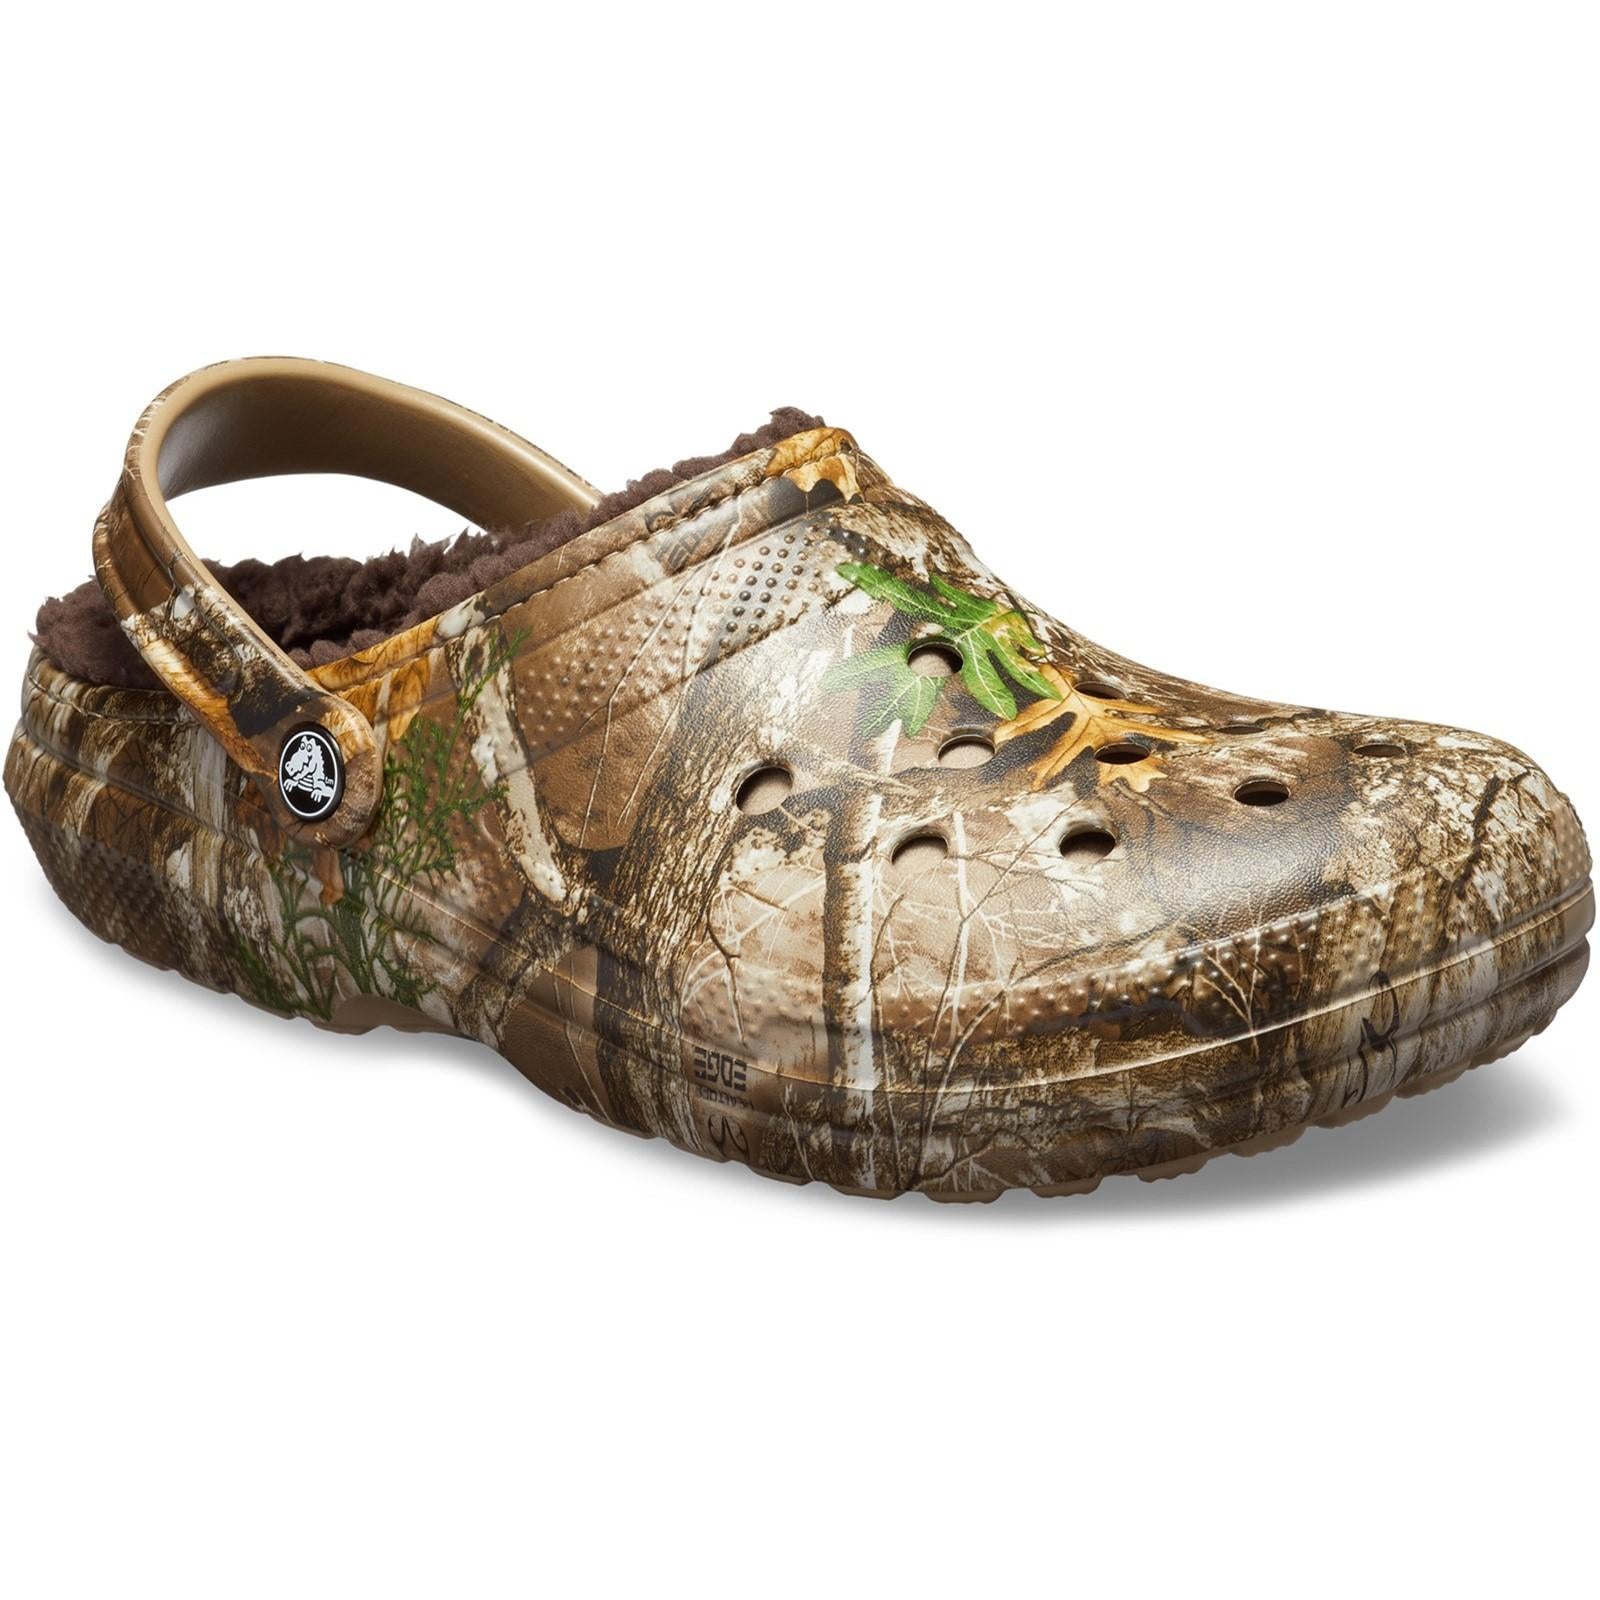 Crocs Classic Realtree Edge Lined Clog Shoes